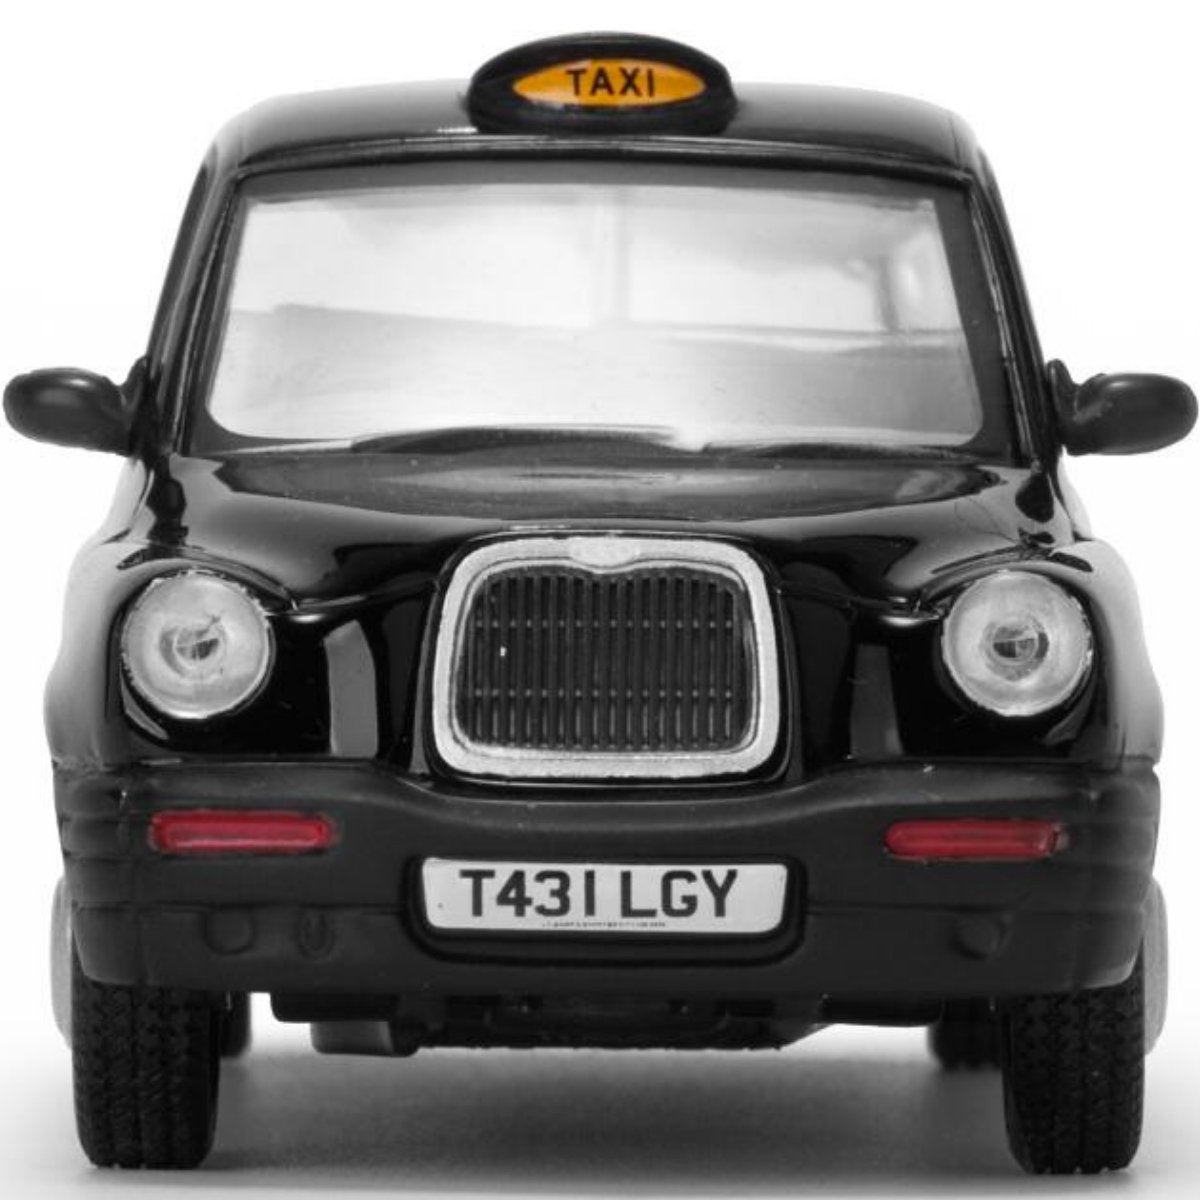 Vitesse 1998 TX1 London Taxi Cab - Black - Phillips Hobbies